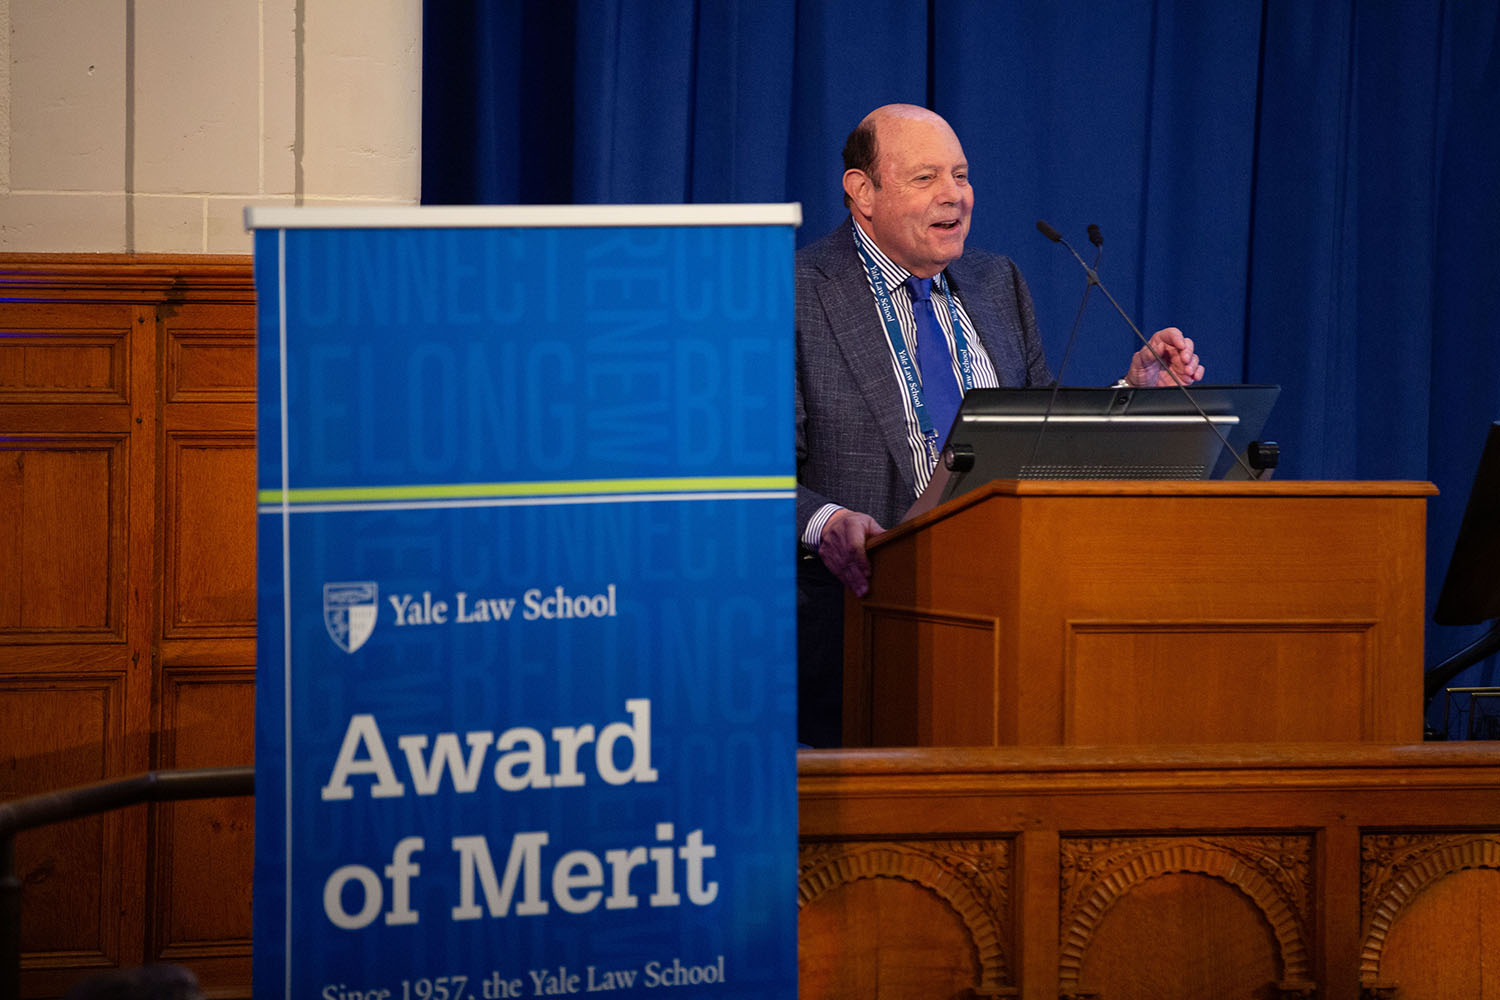 Gene Ludwig speaks after receiving the Award of Merit